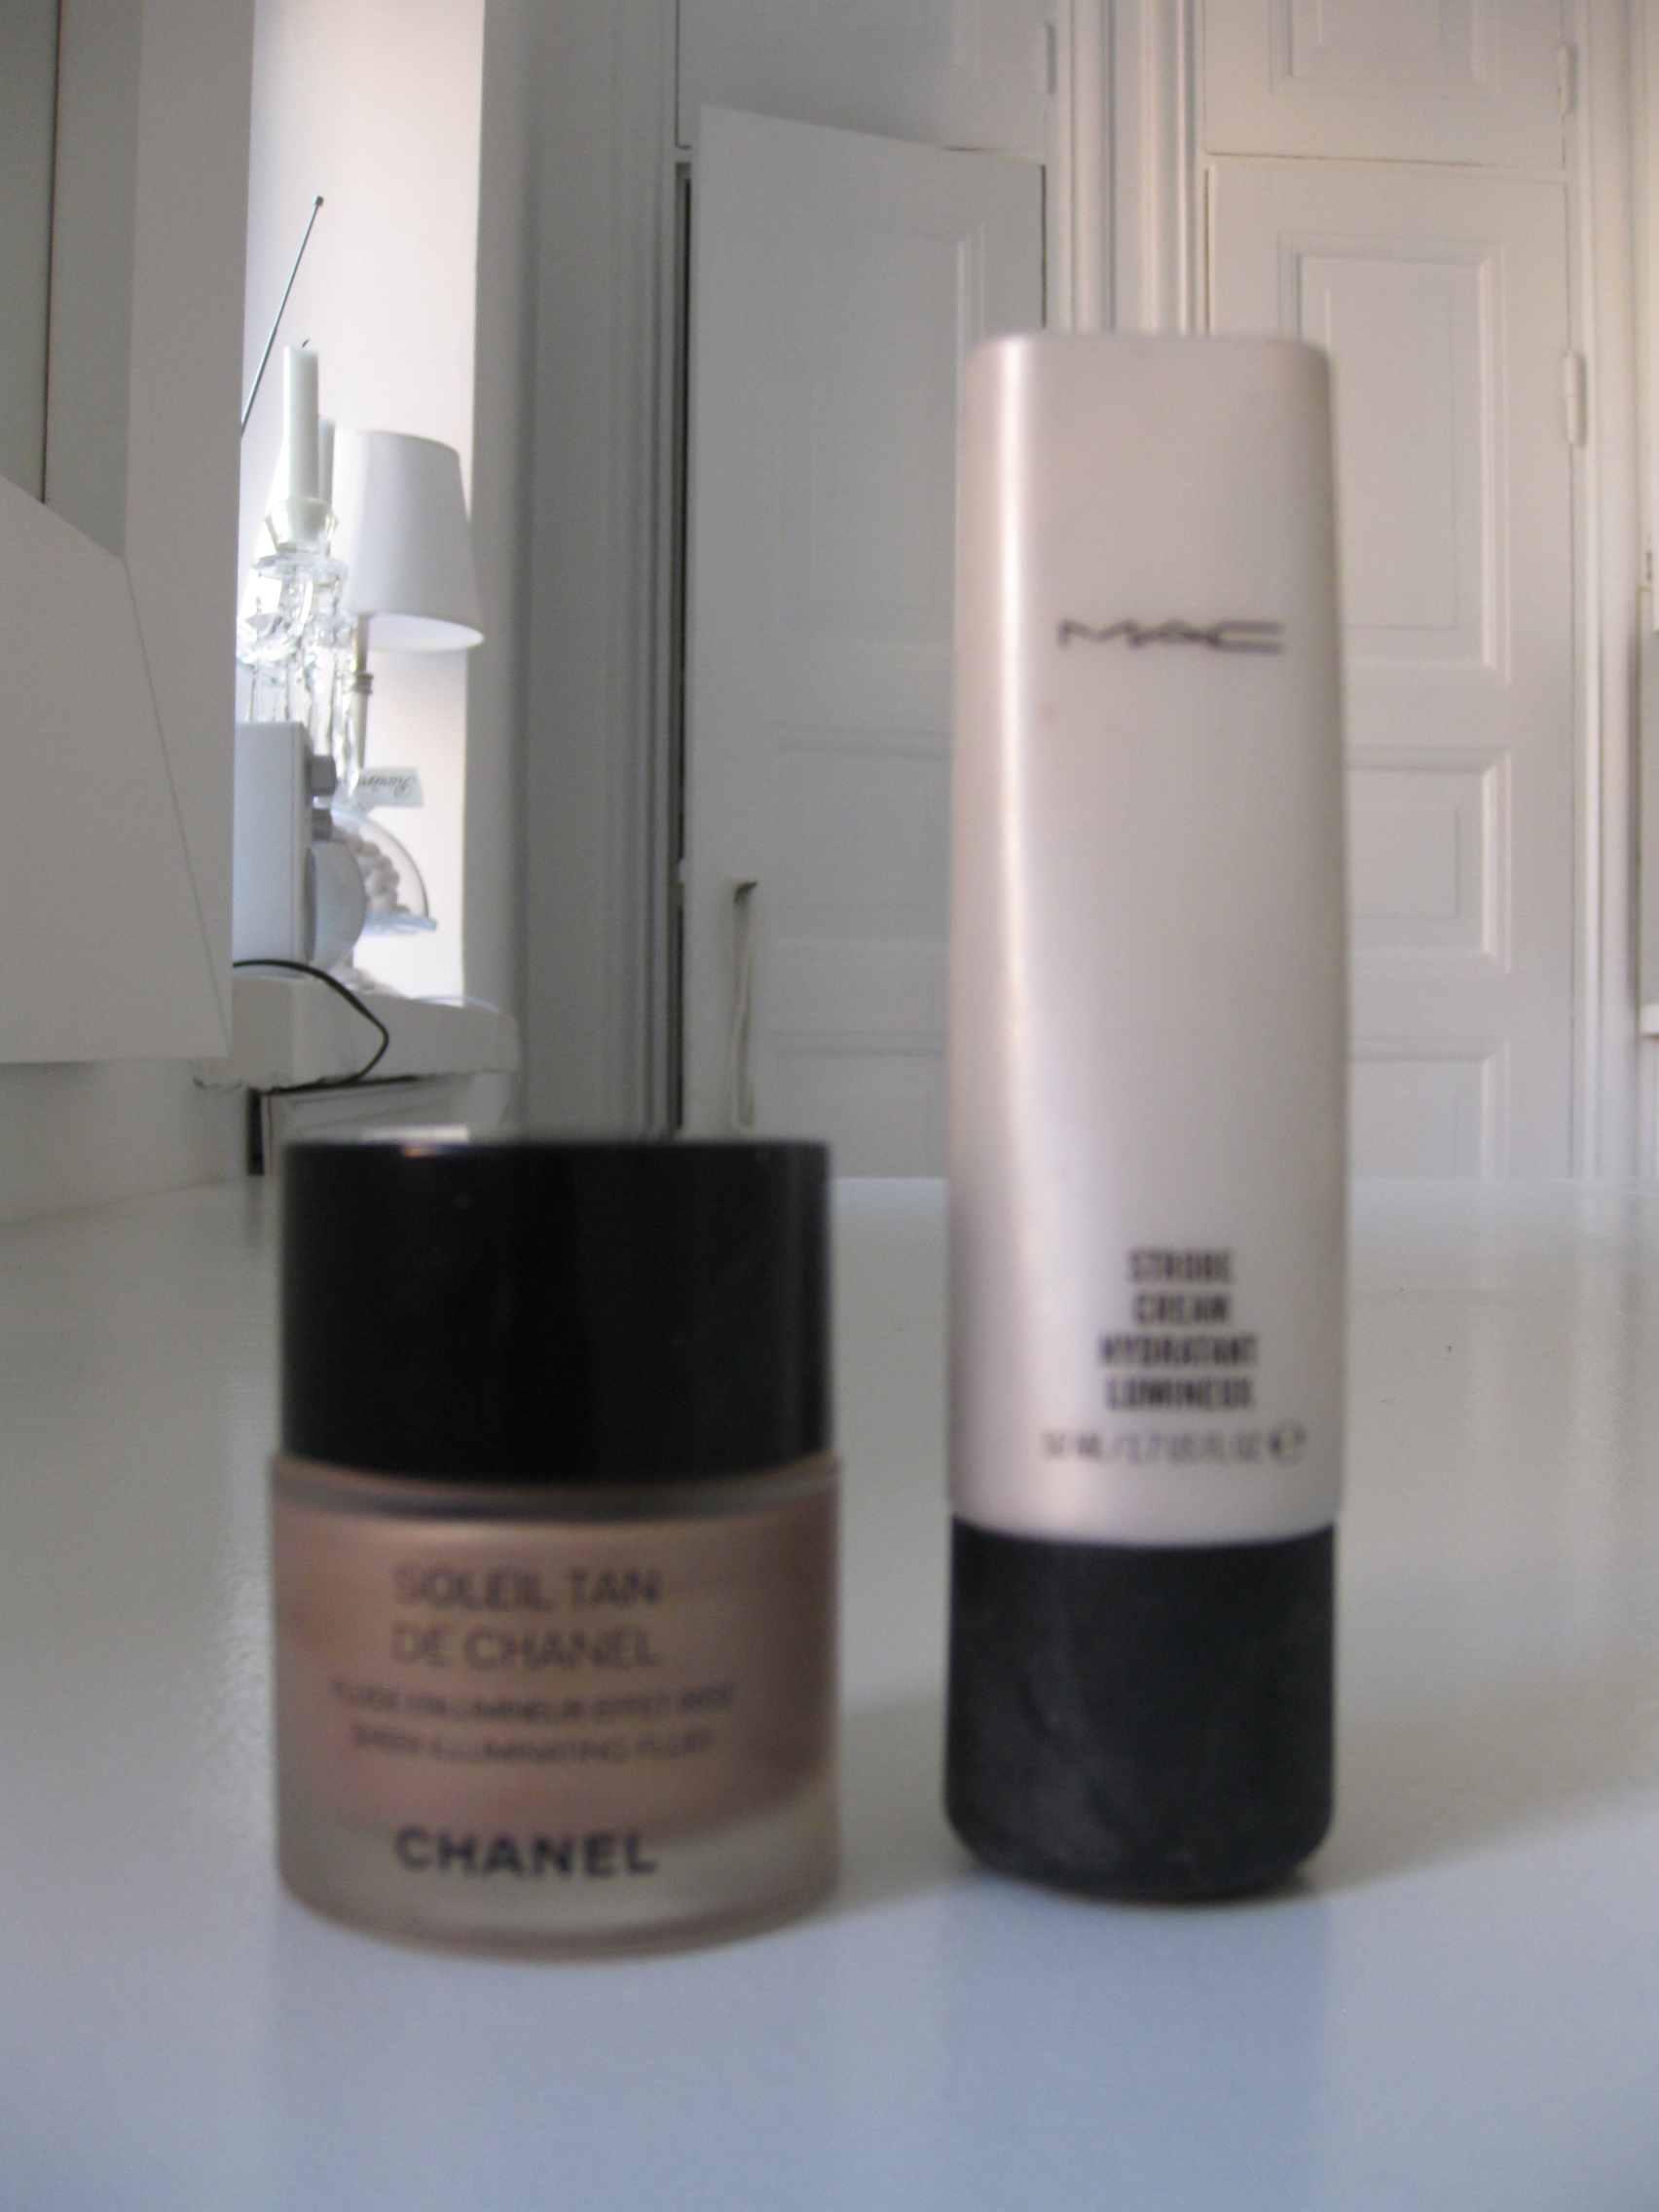 Chanel Soleil Tan De Chanel Sheer Illuminating Fluid # Sunkissed